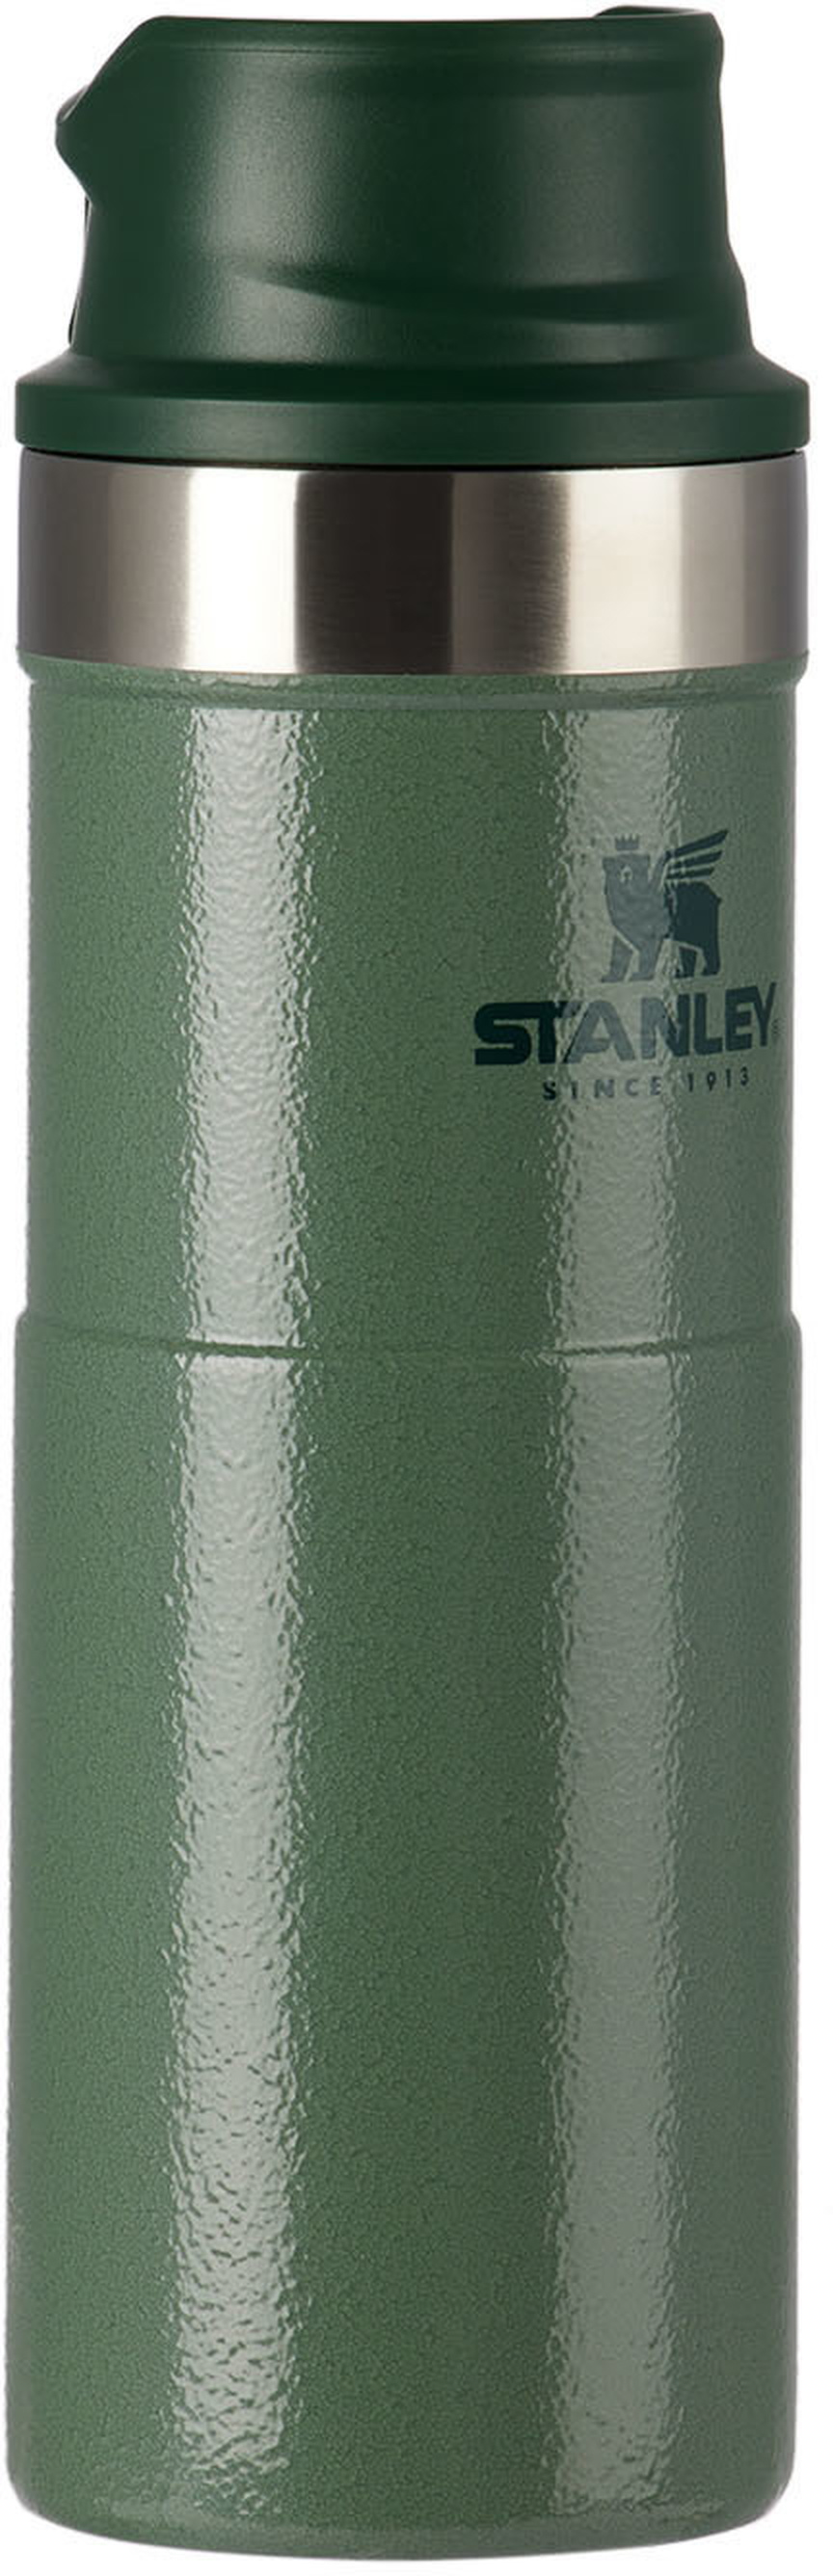 Stanley green mug -  Italia